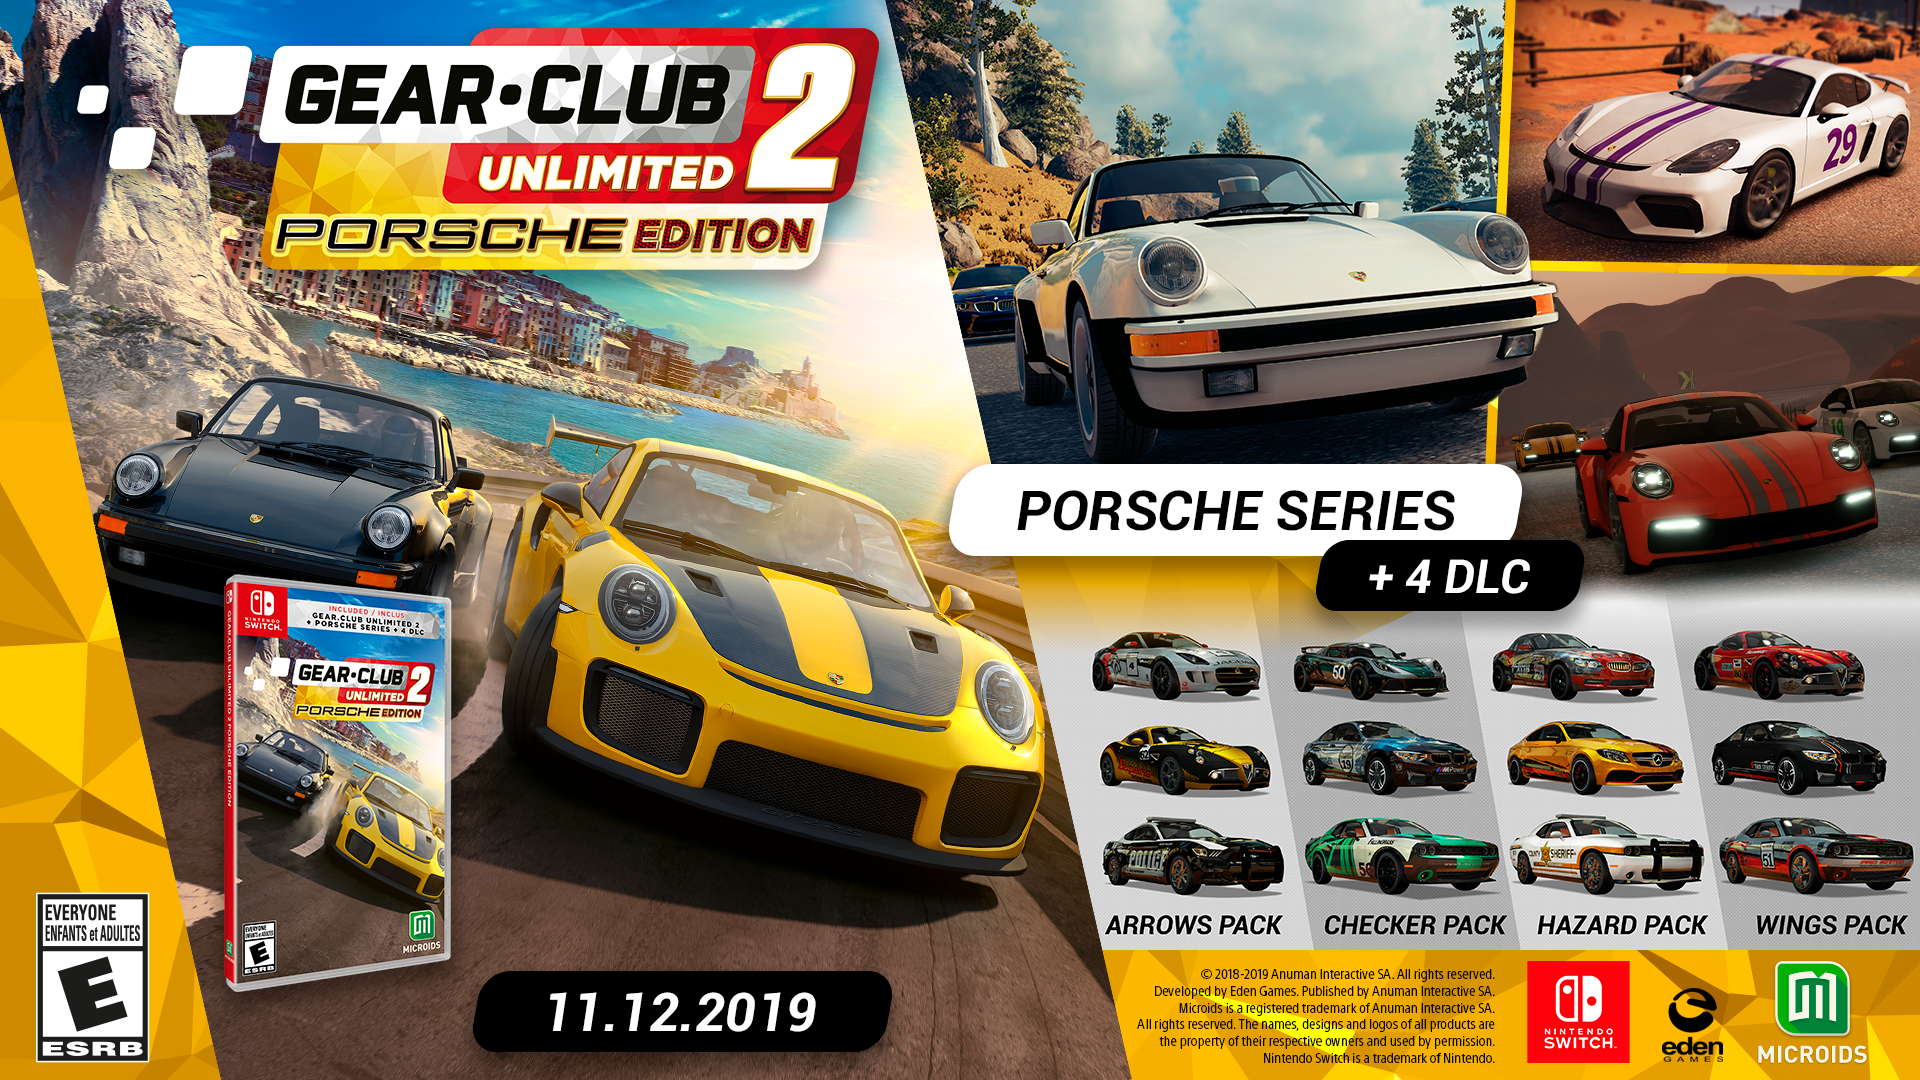 pečat događaj duševno zdravlje  Review] Gear Club Unlimited 2 Porsche Edition - The Switch Effect